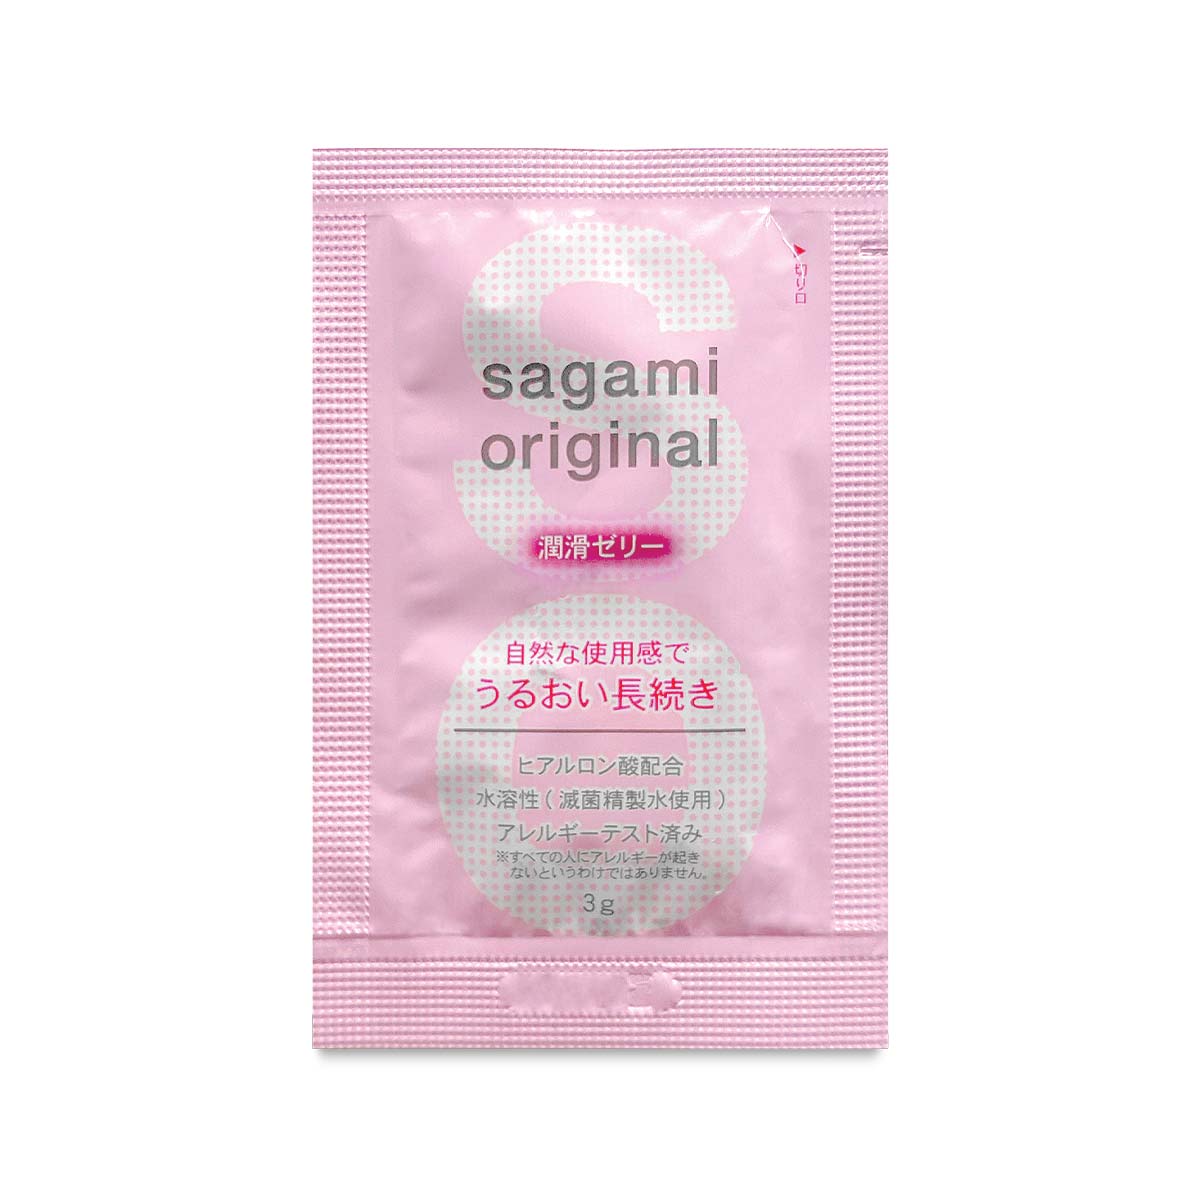 Sagami Sagami Original Lubricating Gel